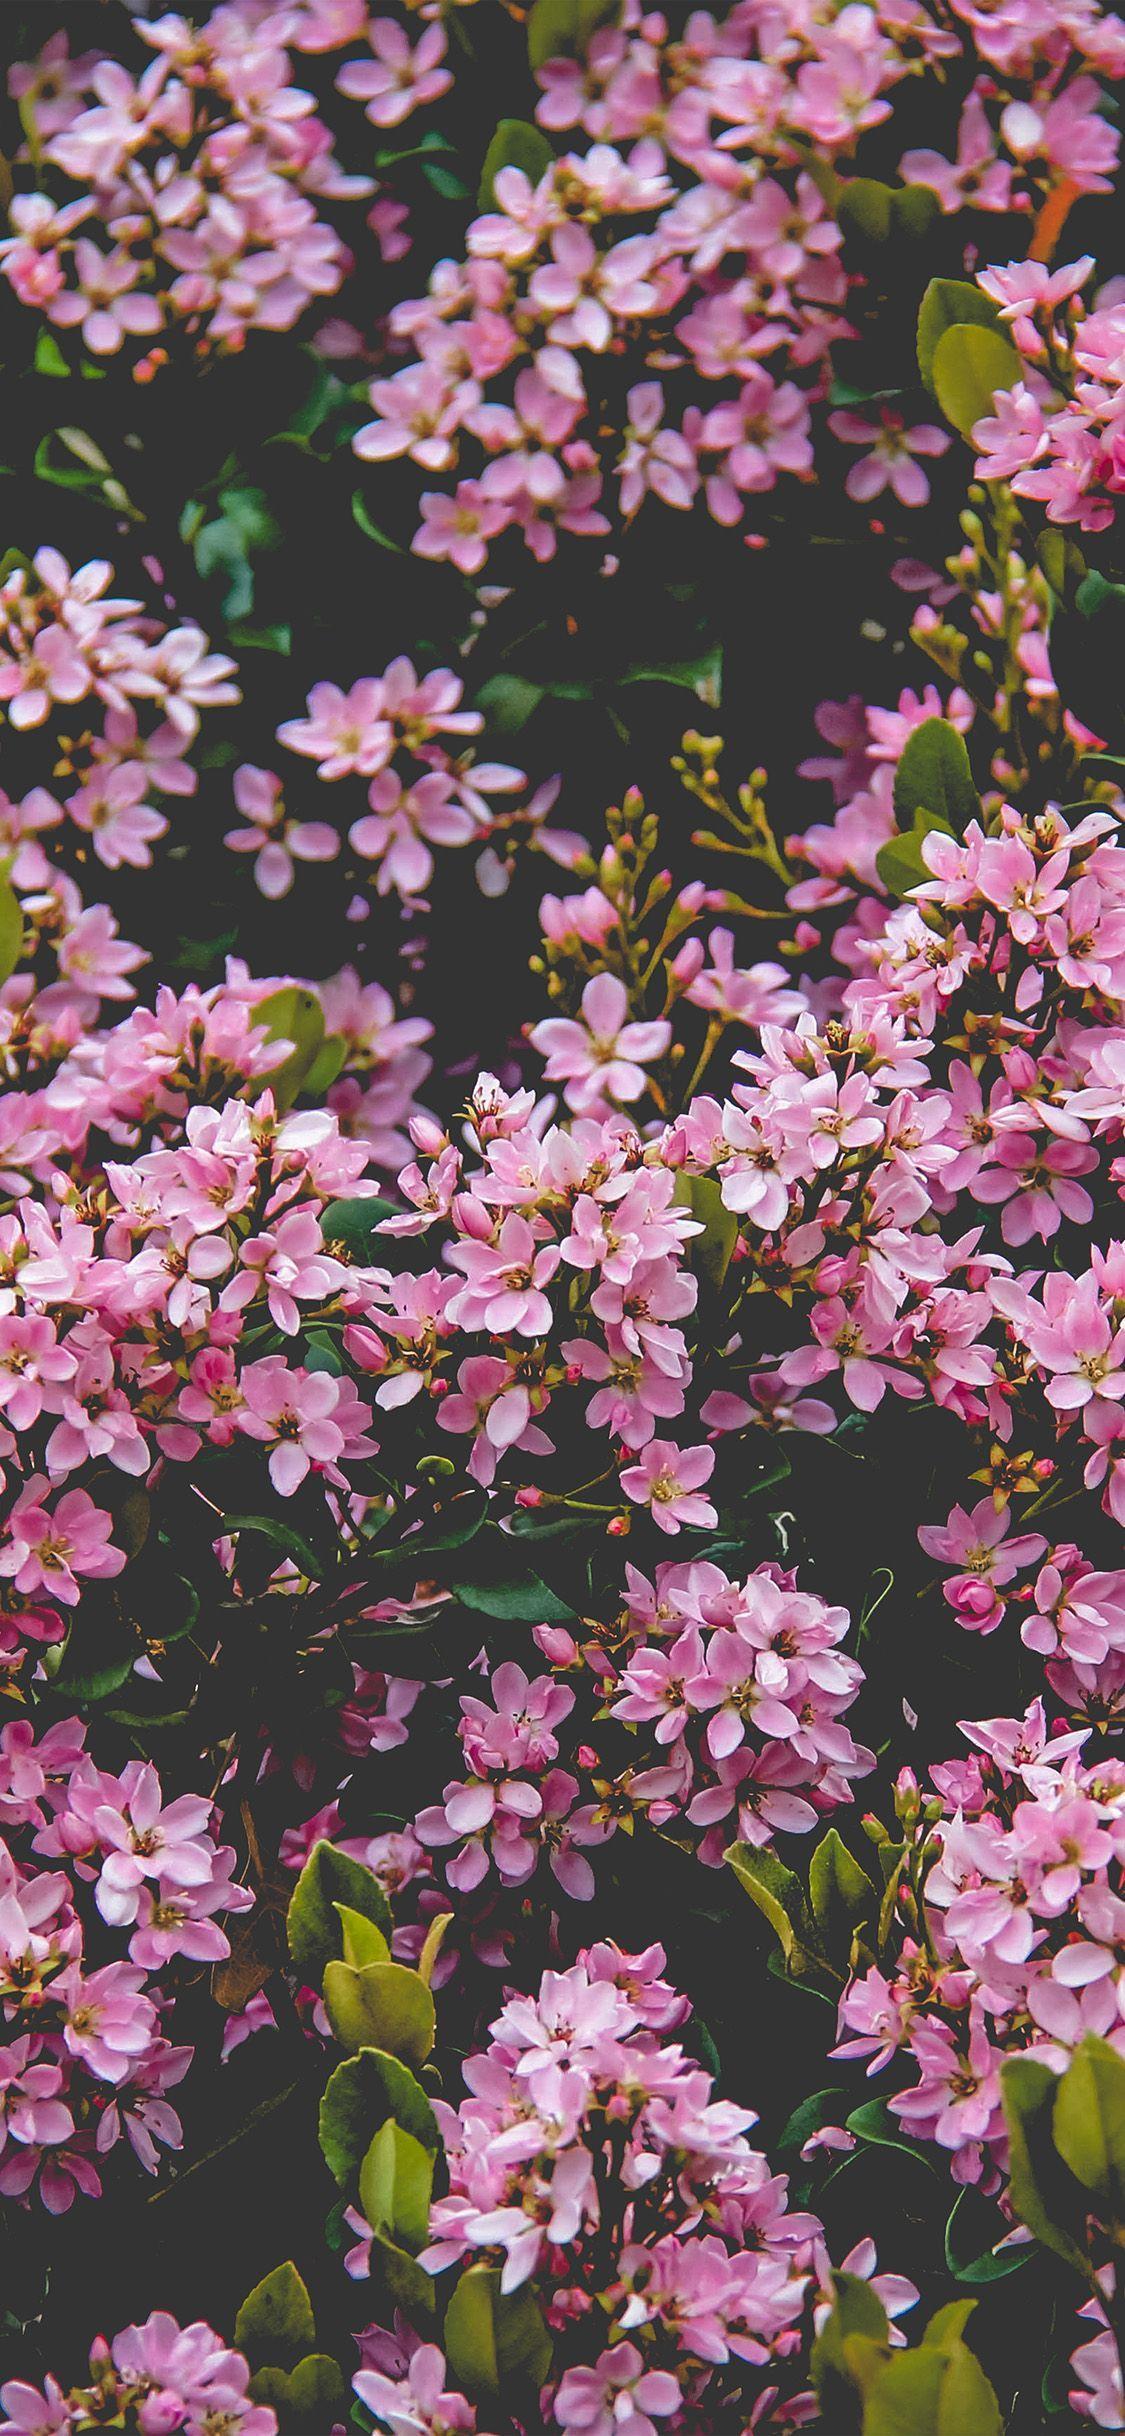 iPhoneX wallpaper: flower pink spring happy nature. Pink